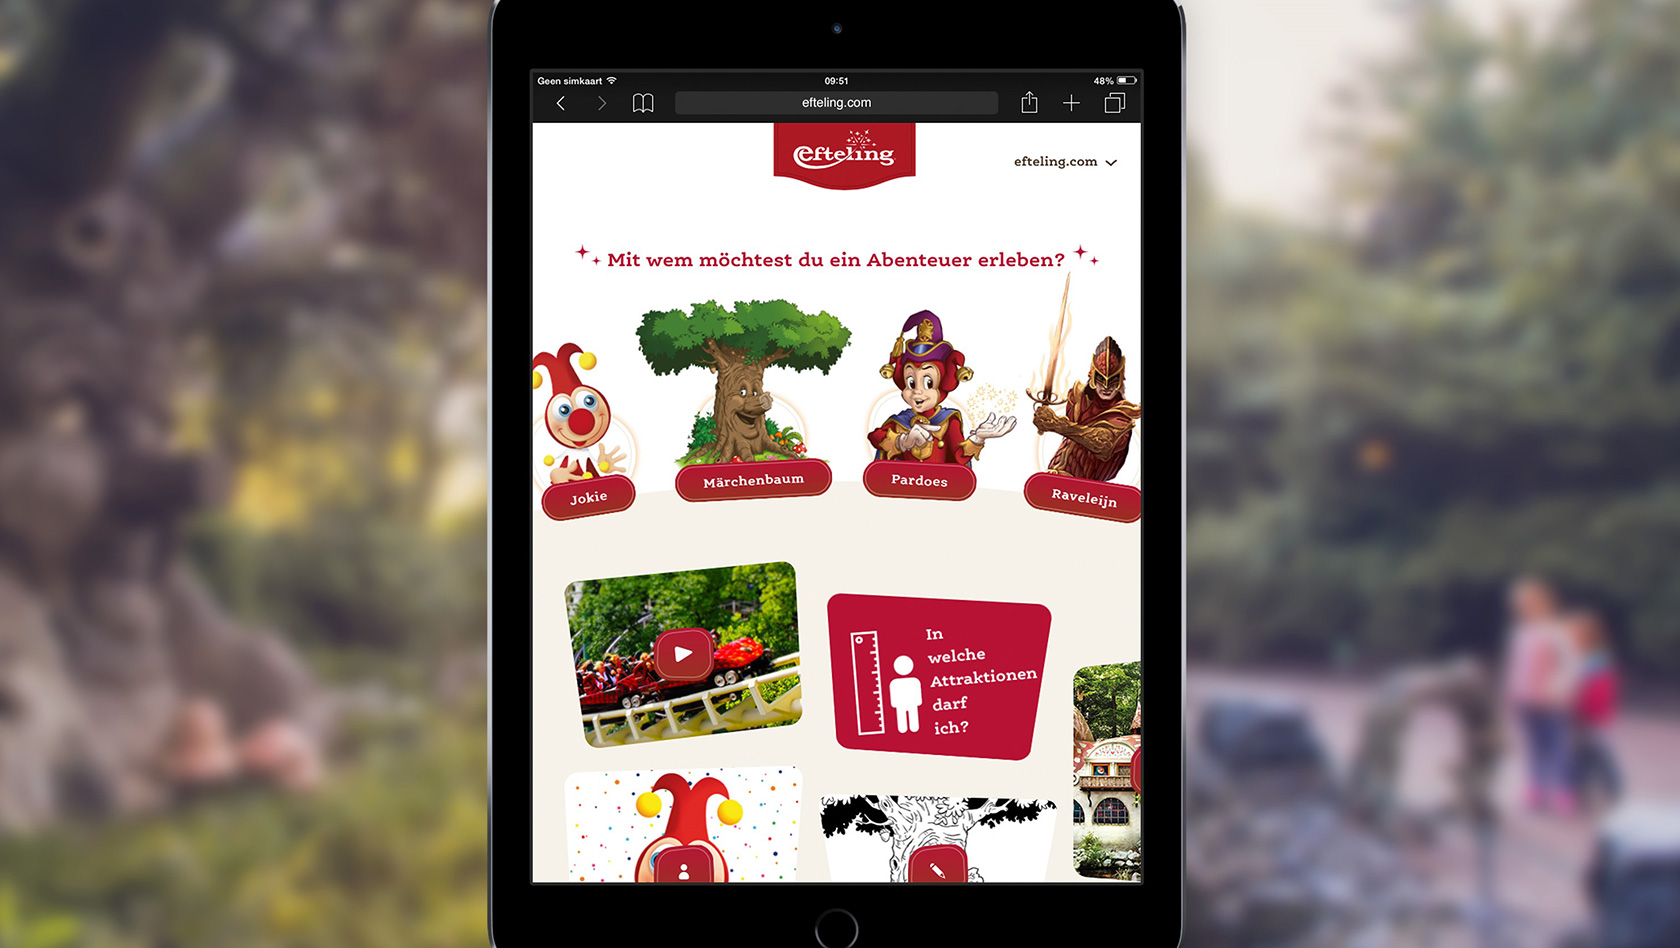 Efteling Digitale Märchenwelt - Online-Plattform für Kinder